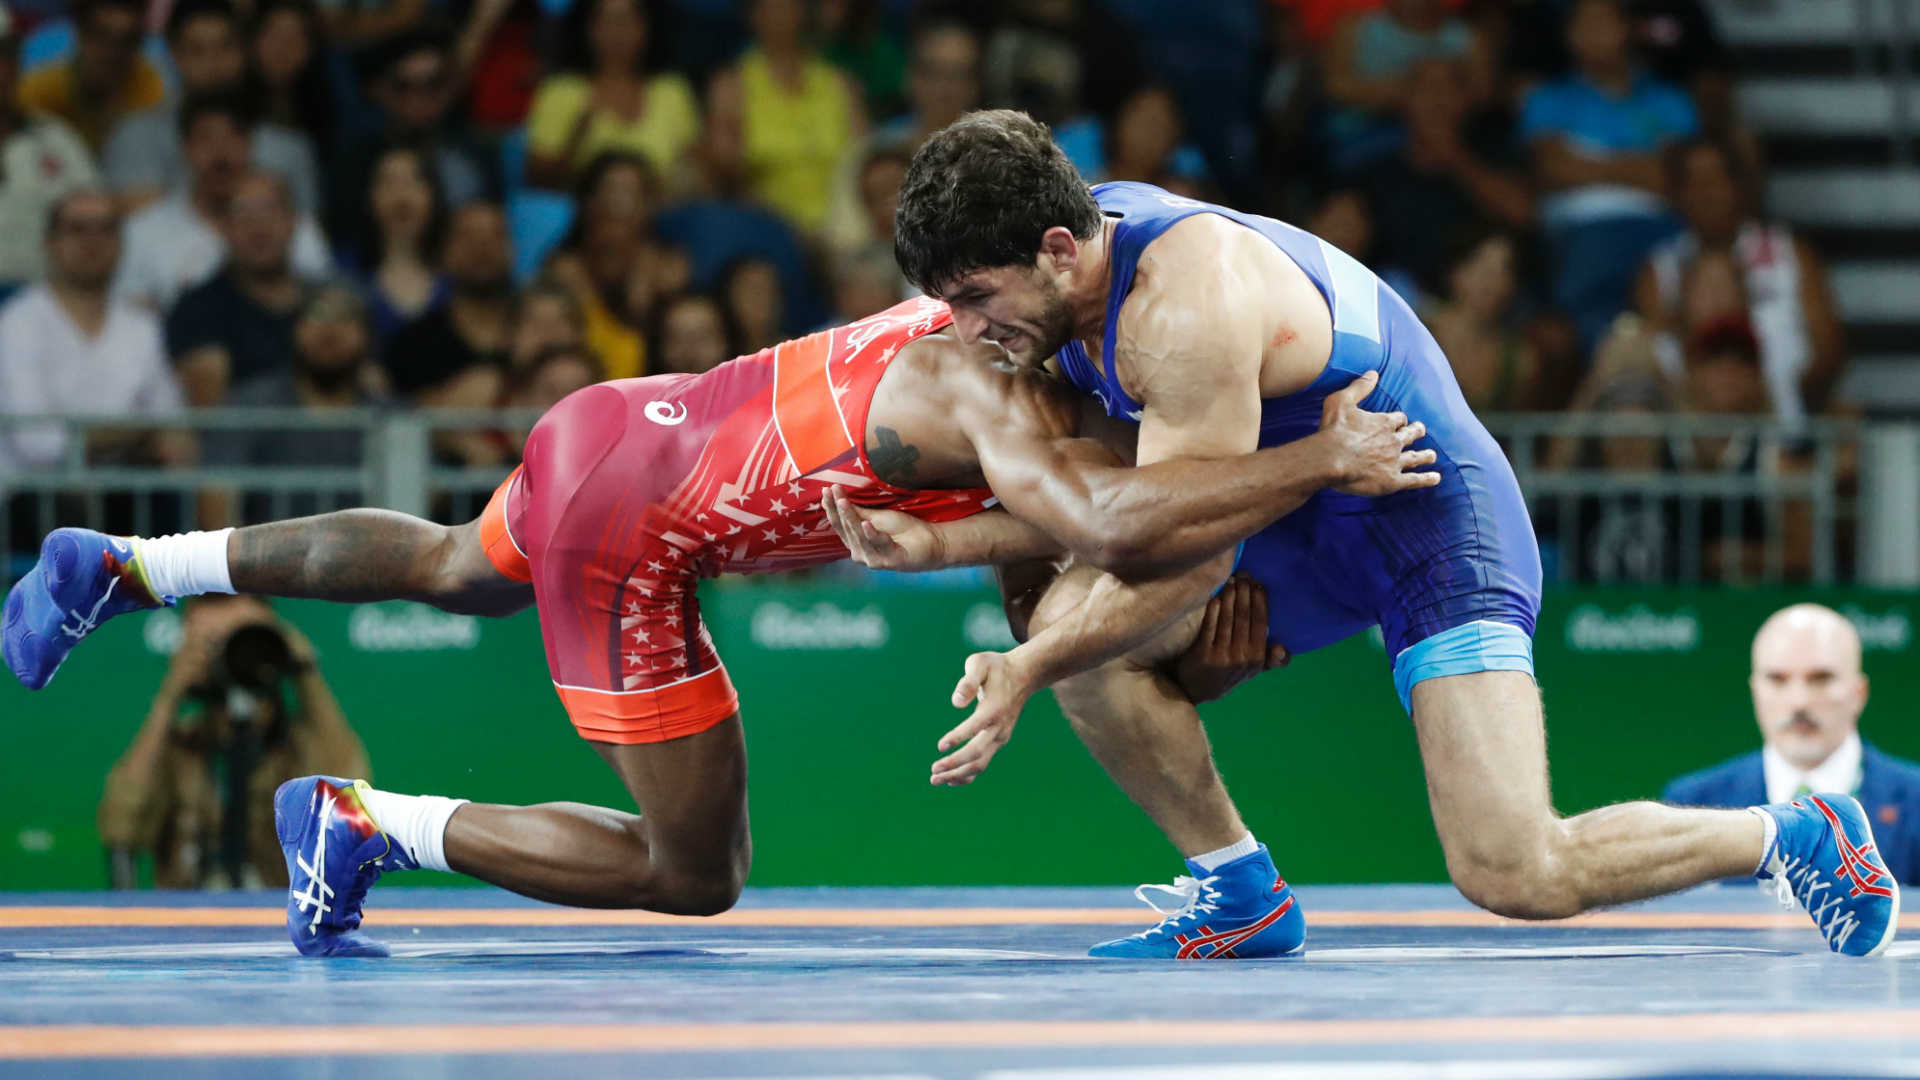 Rio Olympics 2016: USA defending champ Jordan Burroughs goes down